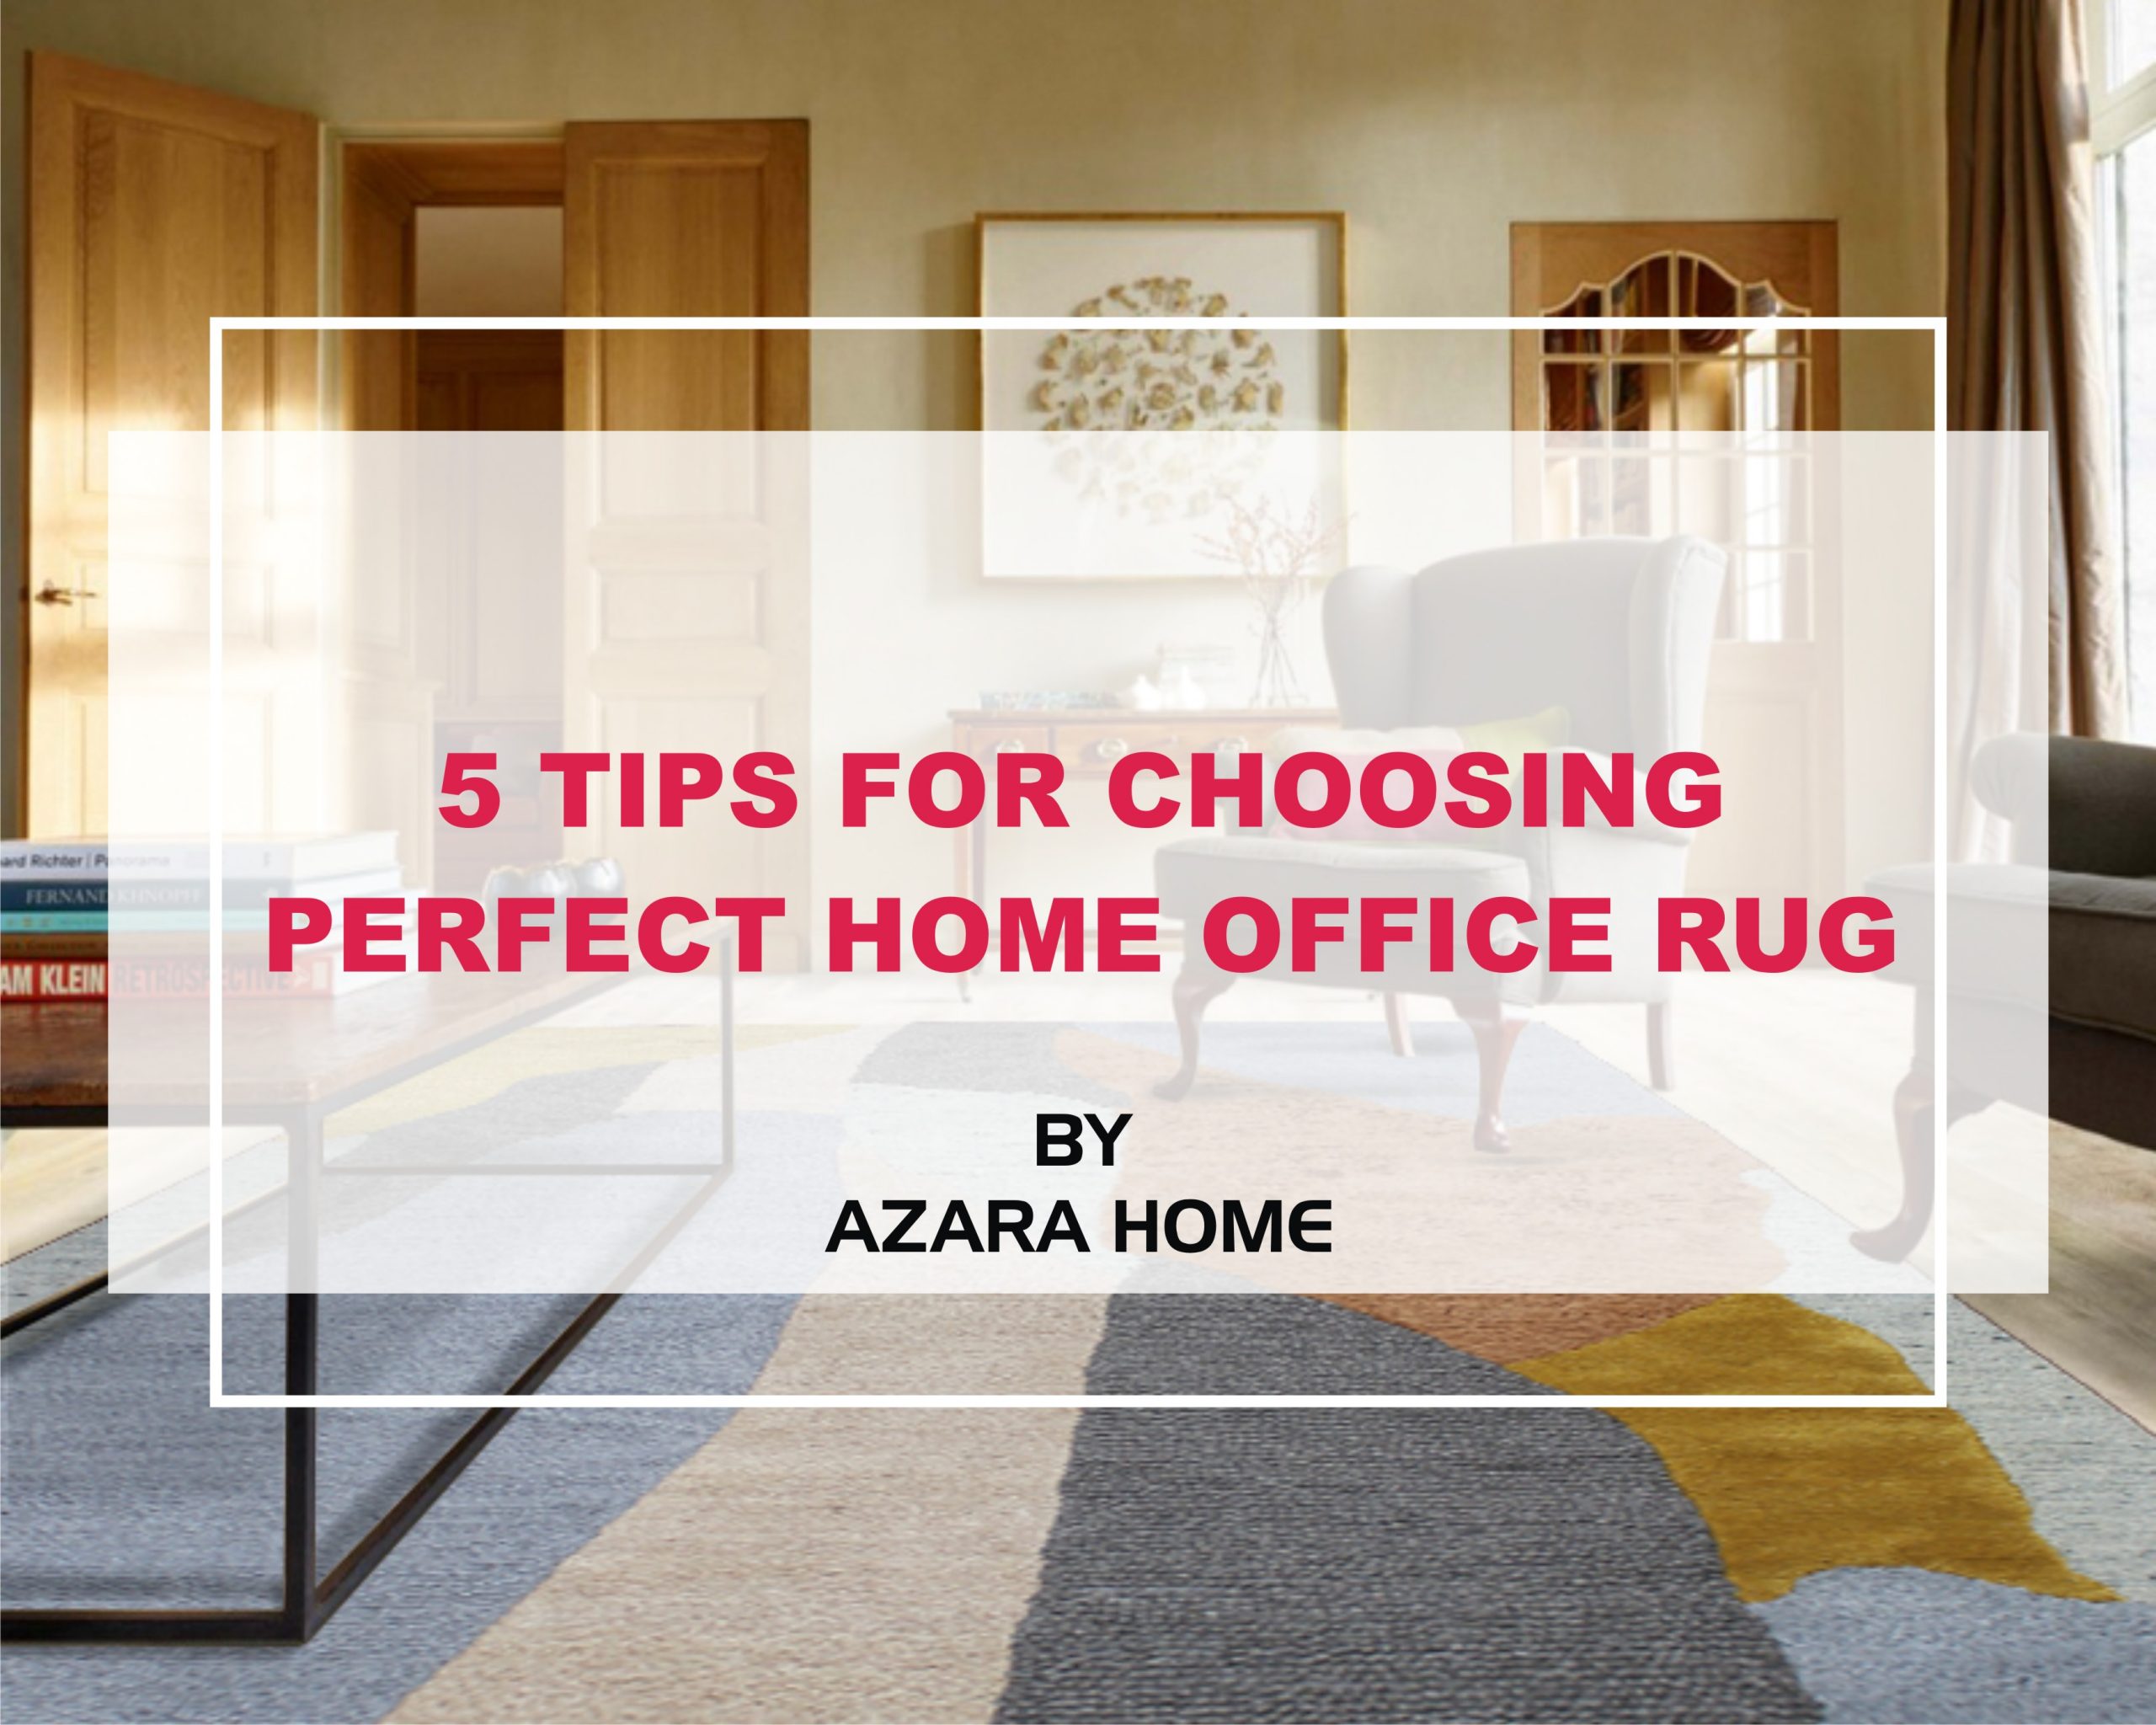 Mobi Poren Lp - 5 Tips For Choosing Perfect Home Office Rug - Azara Home